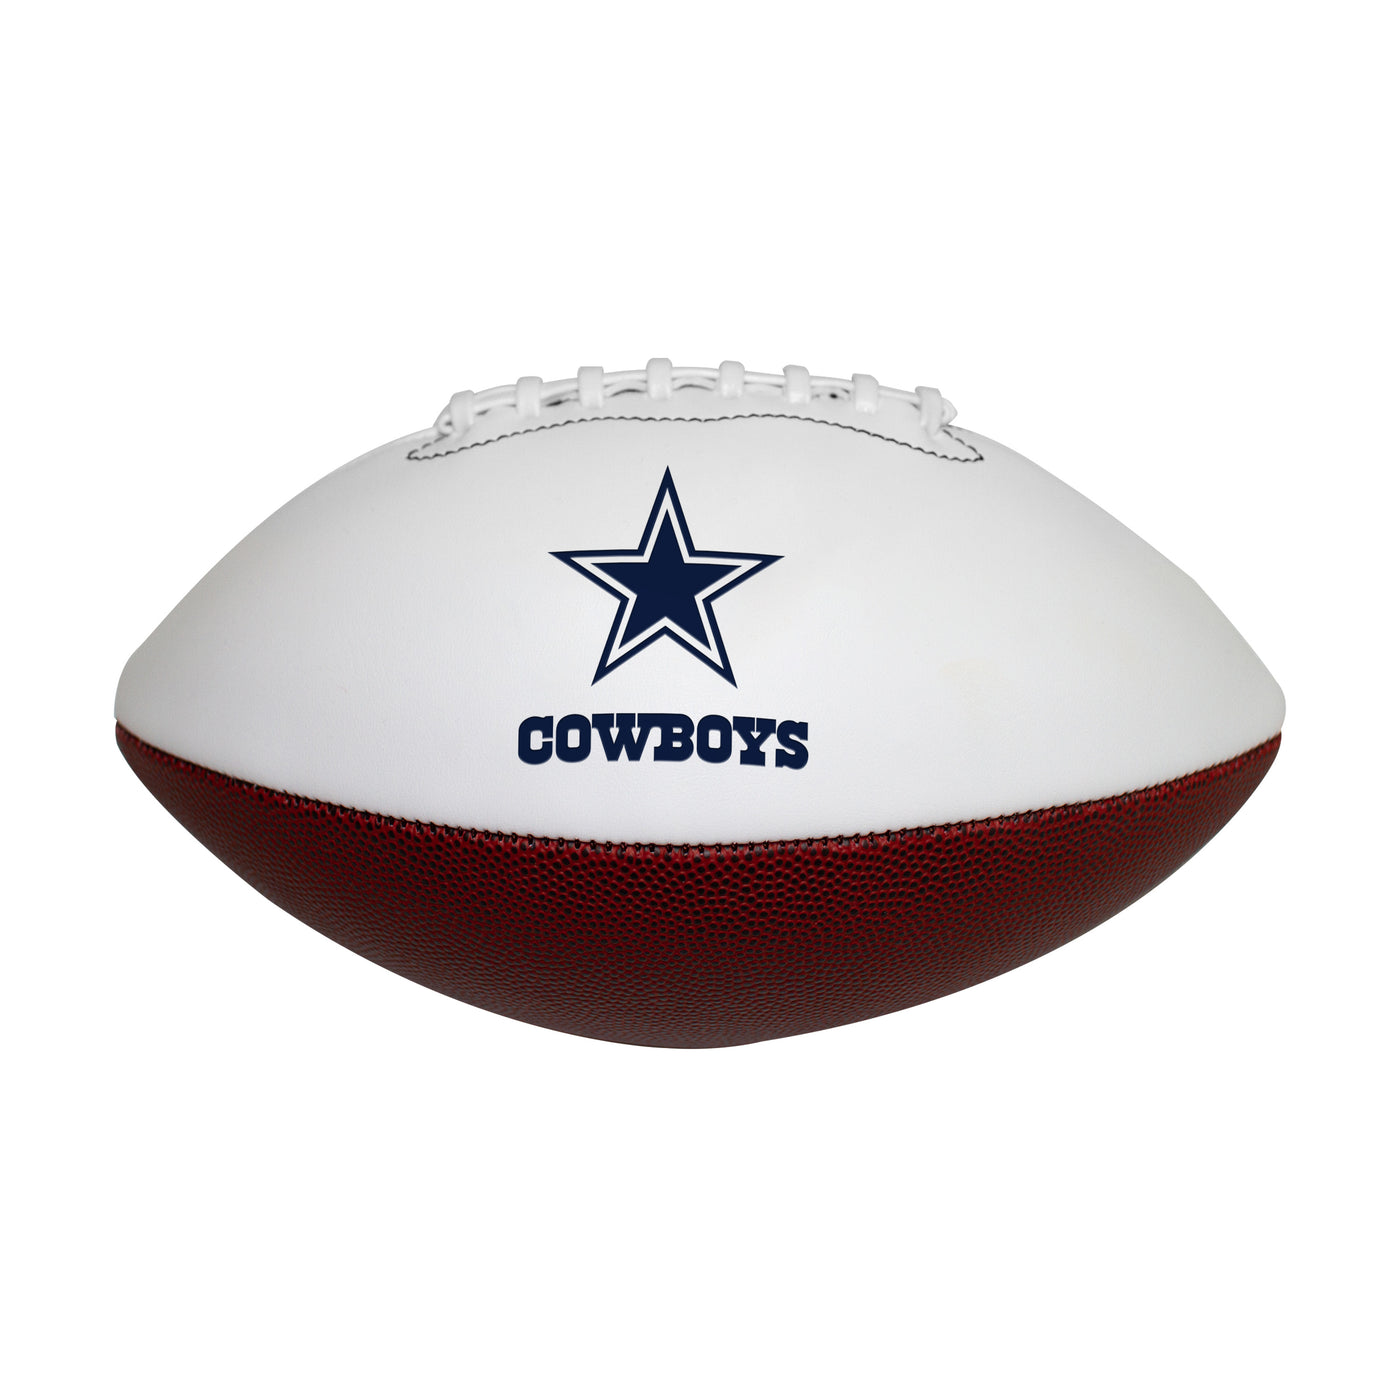 Dallas Cowboys Full Size Autograph Football